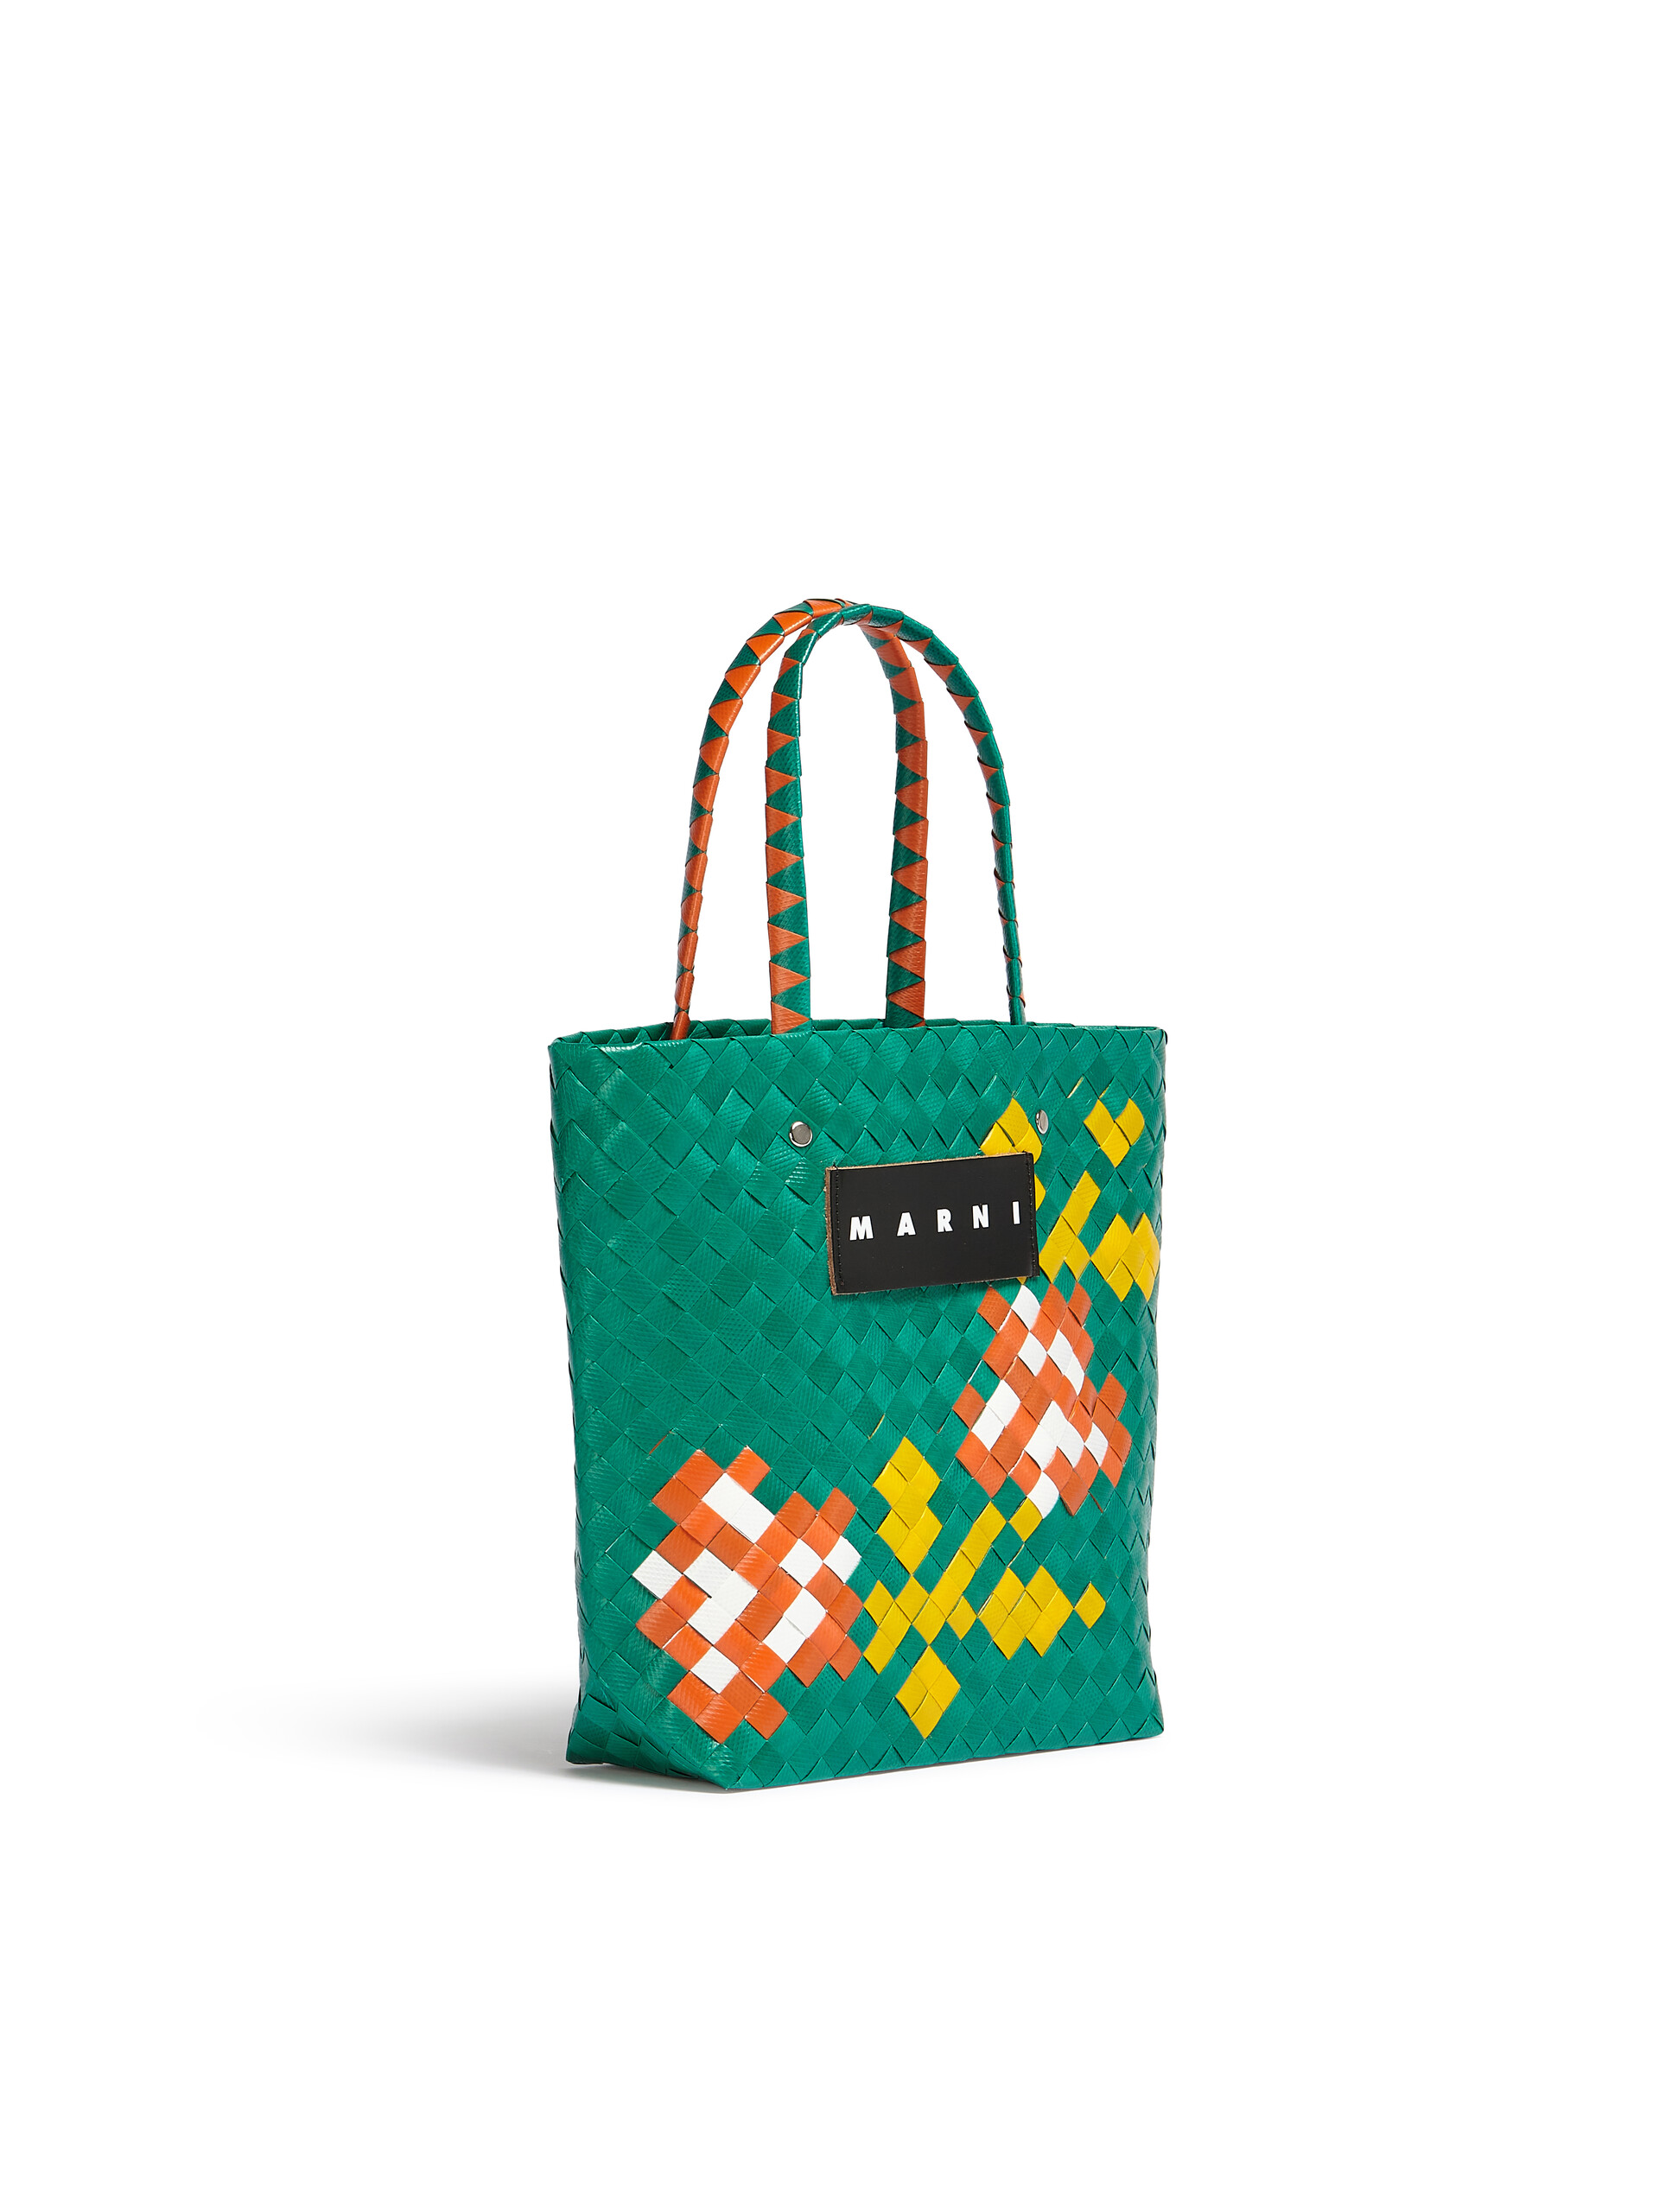 MARNI MARKET small bag in green flower motif - Bags - Image 2